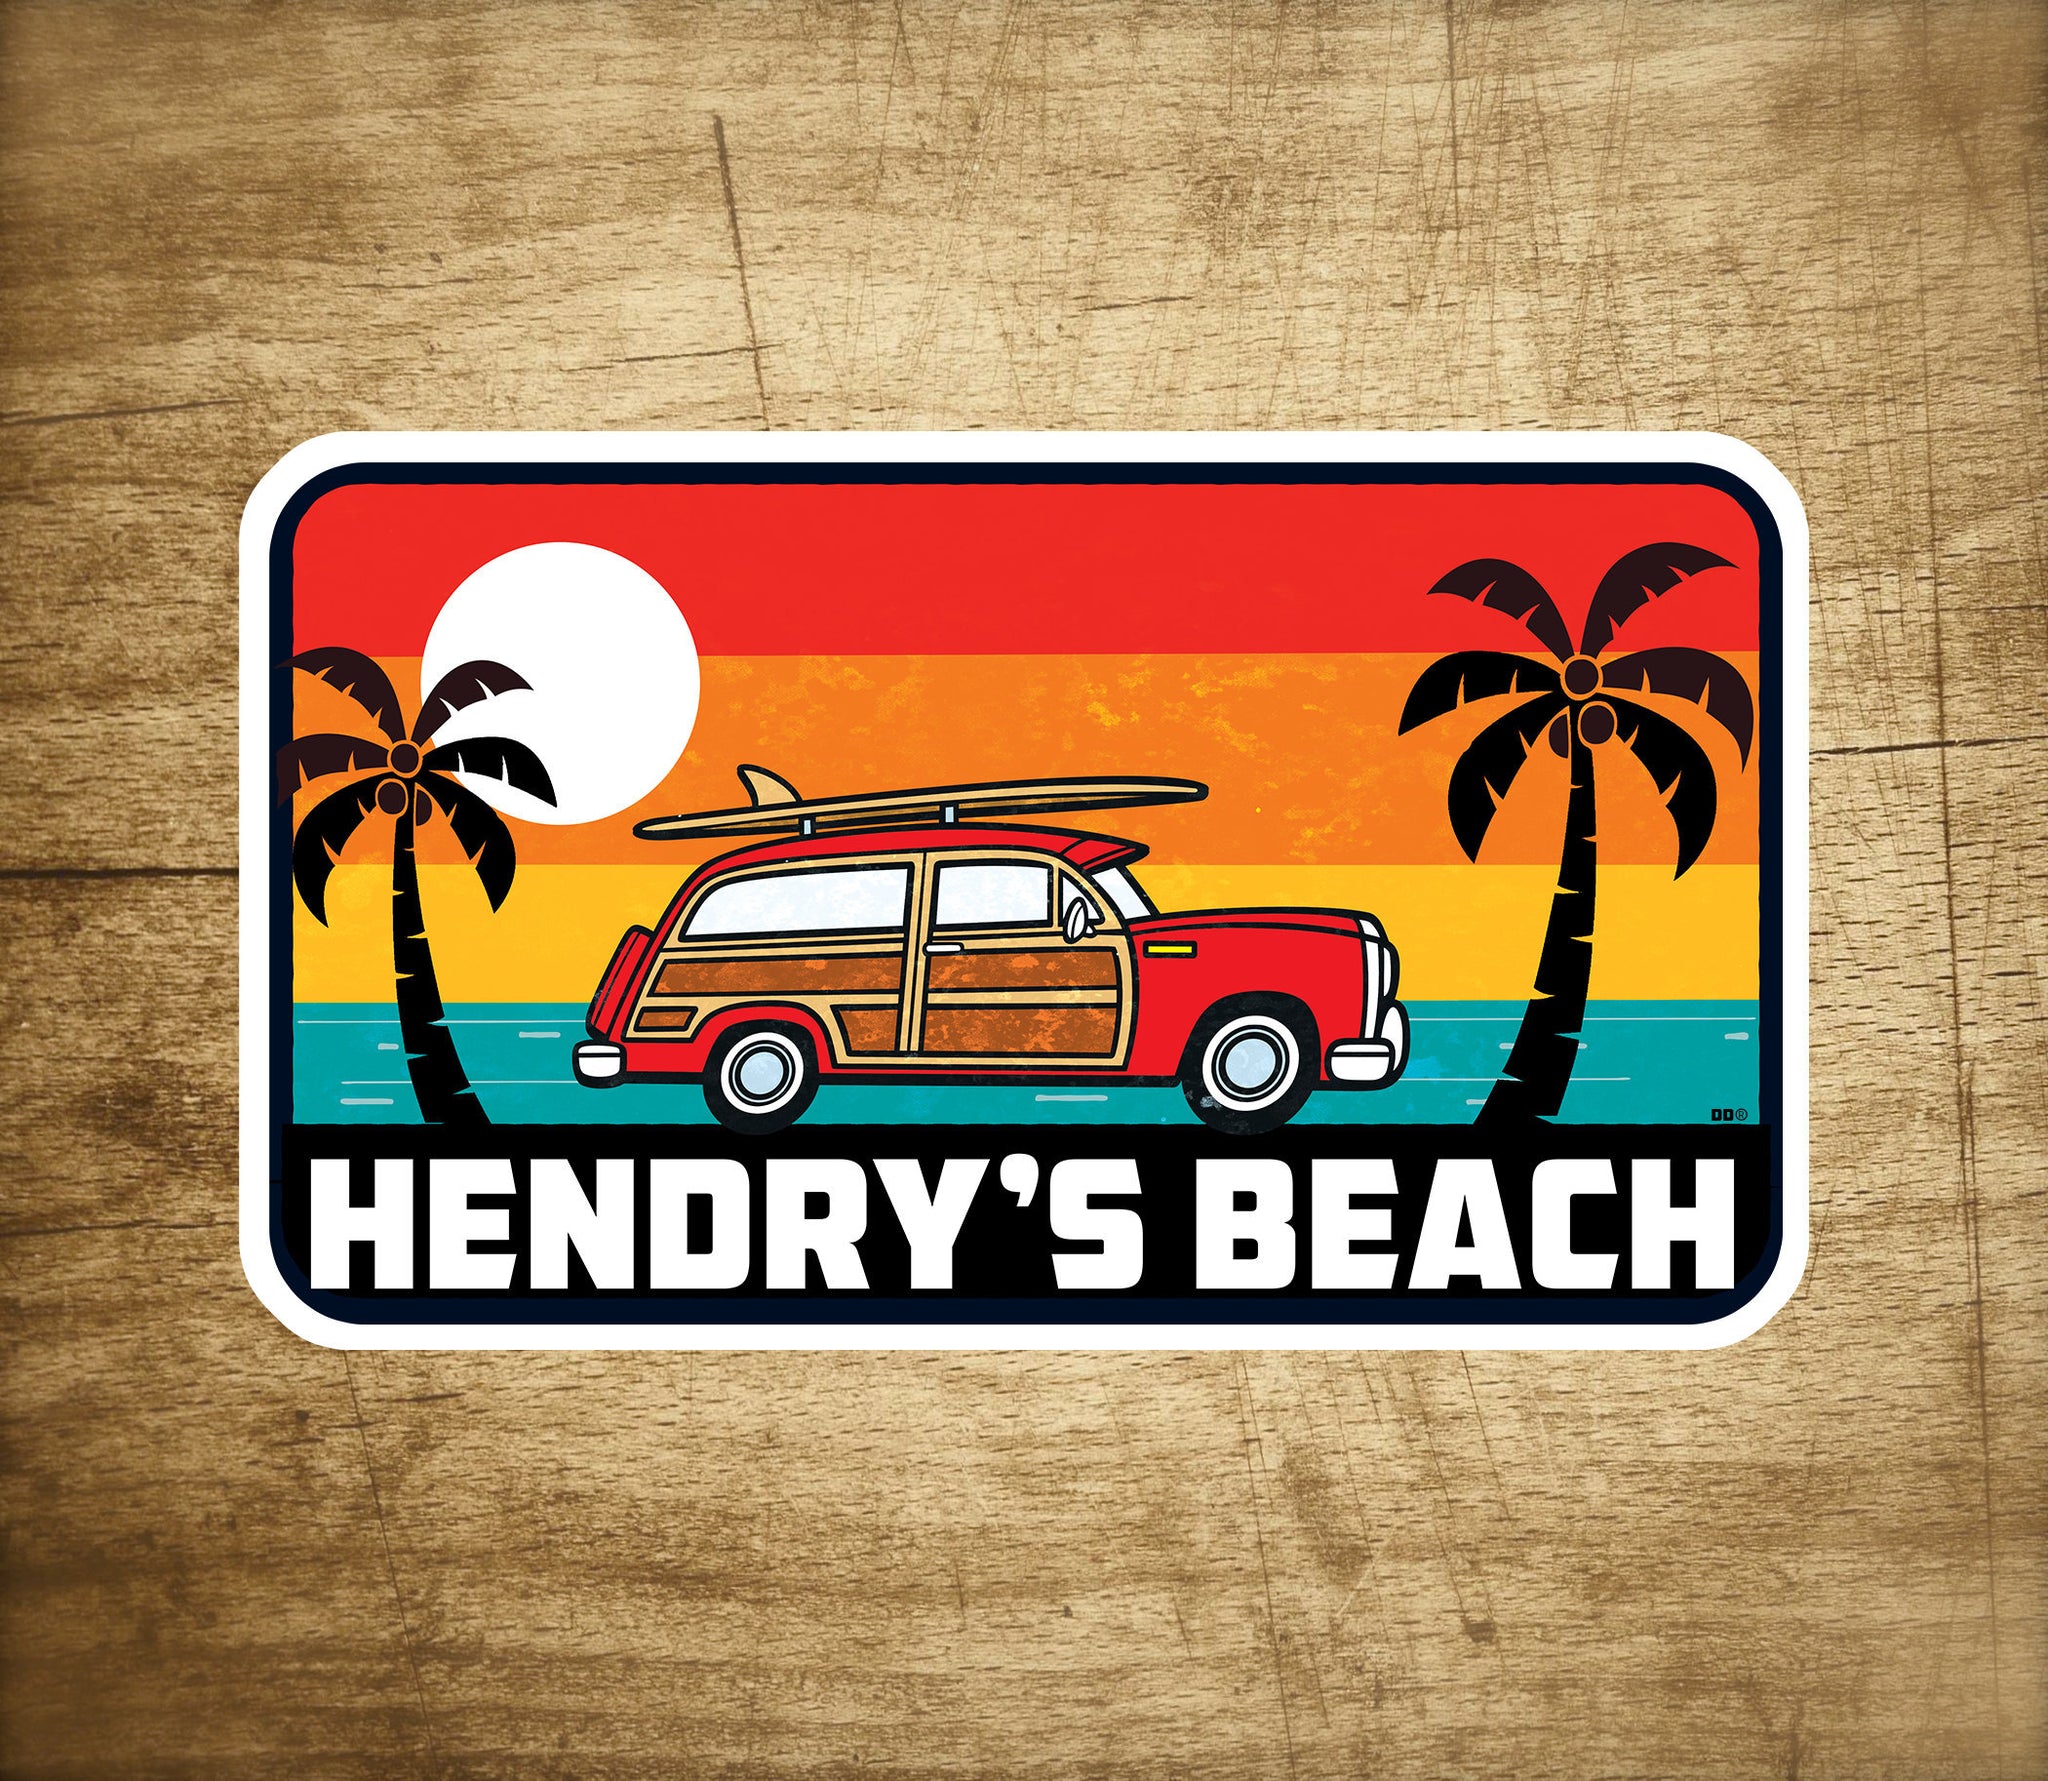 Hendry's Beach California Decal Sticker 3.75" X 2.25" Surf Santa Barbara Surfing